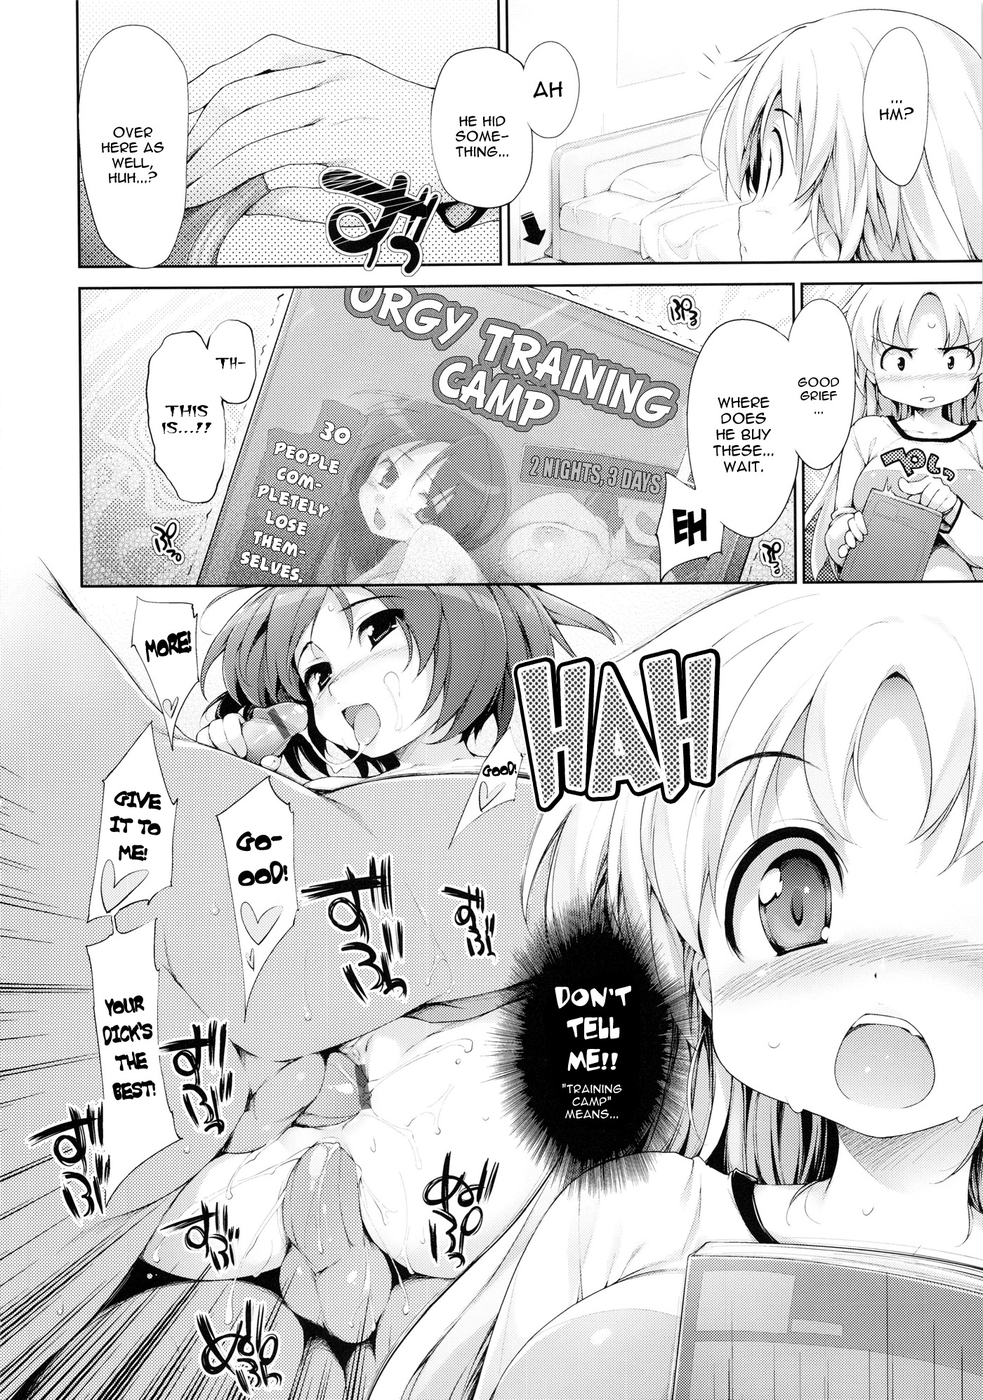 Hentai Manga Comic-TiTiKEi-Chapter 6-Various Things Over Here As Well-2